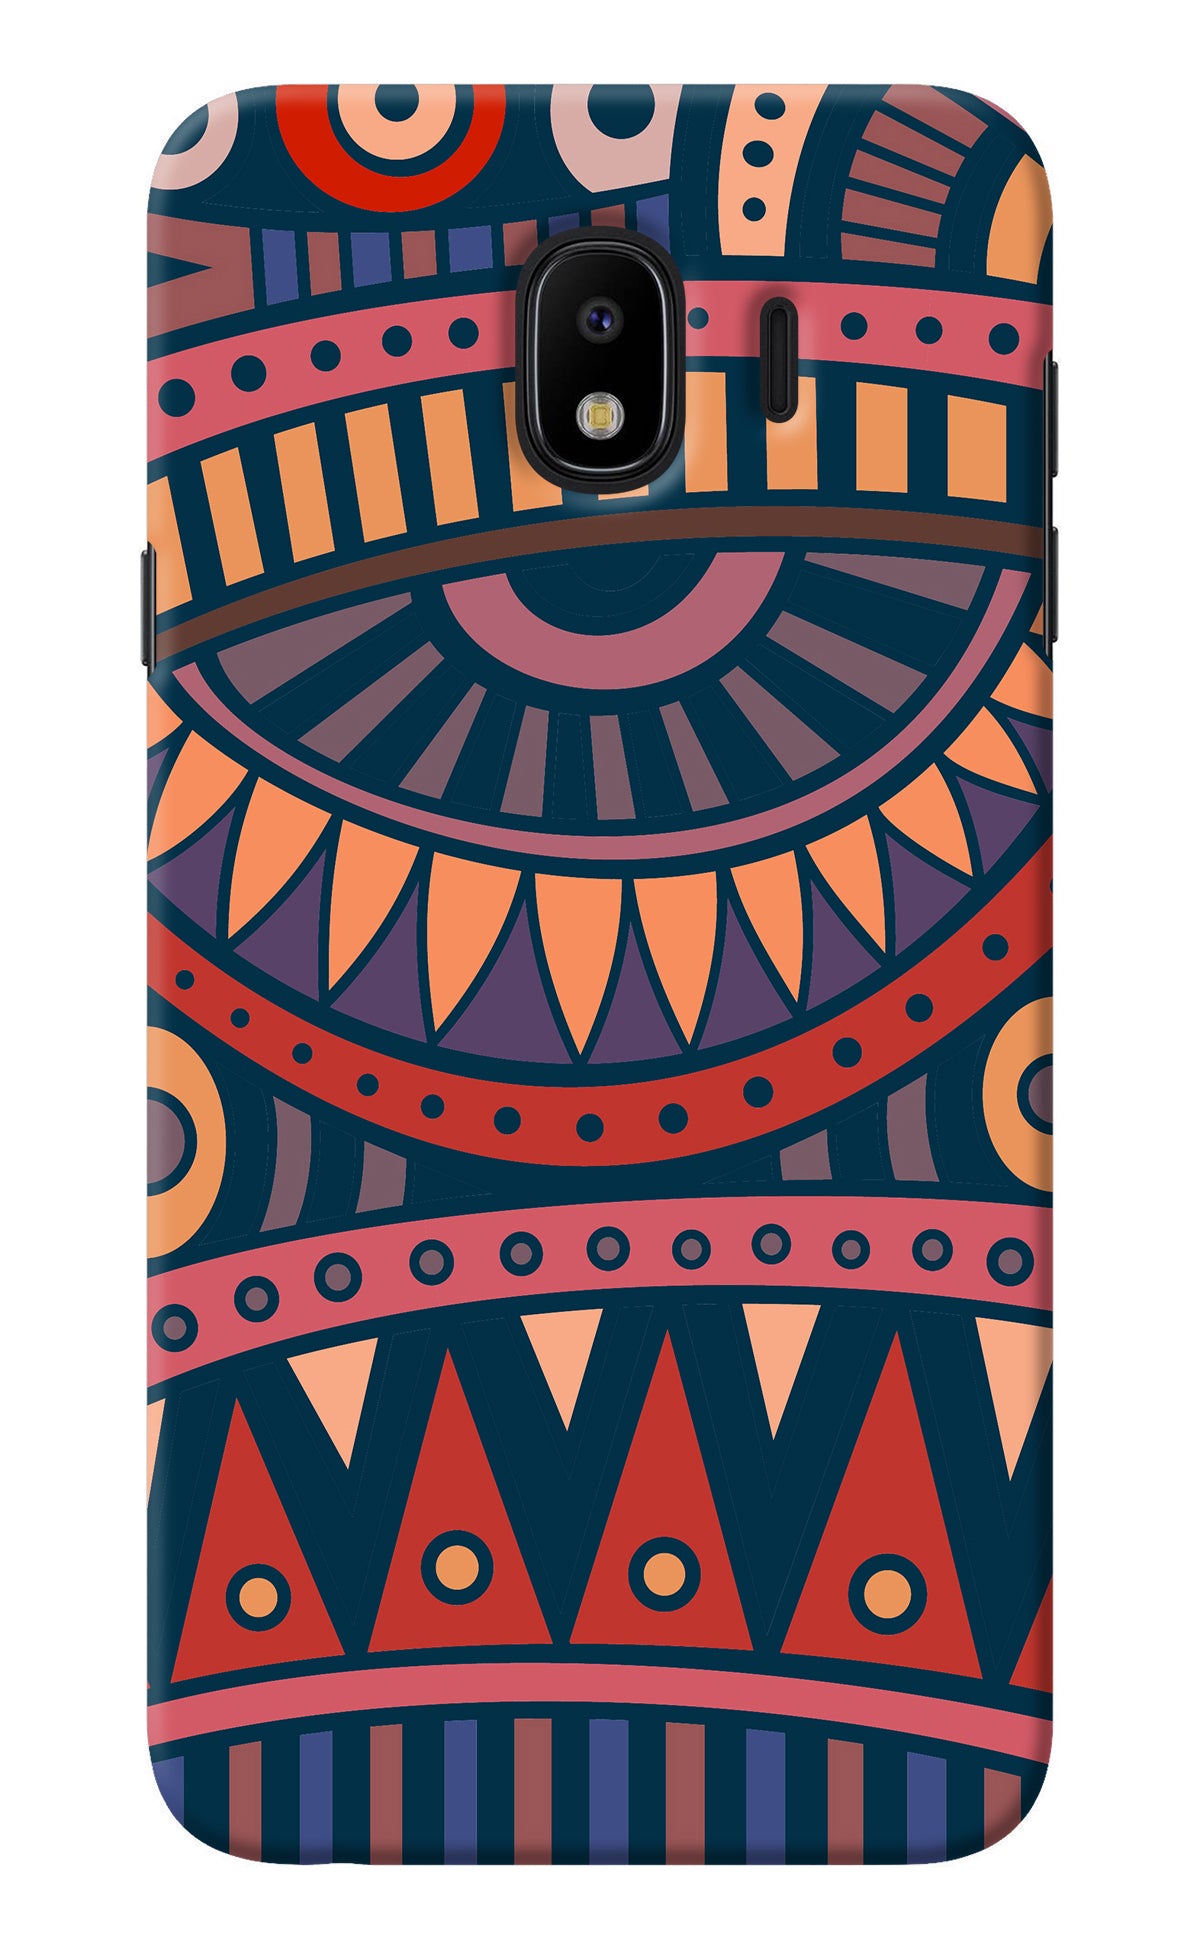 African Culture Design Samsung J4 Back Cover